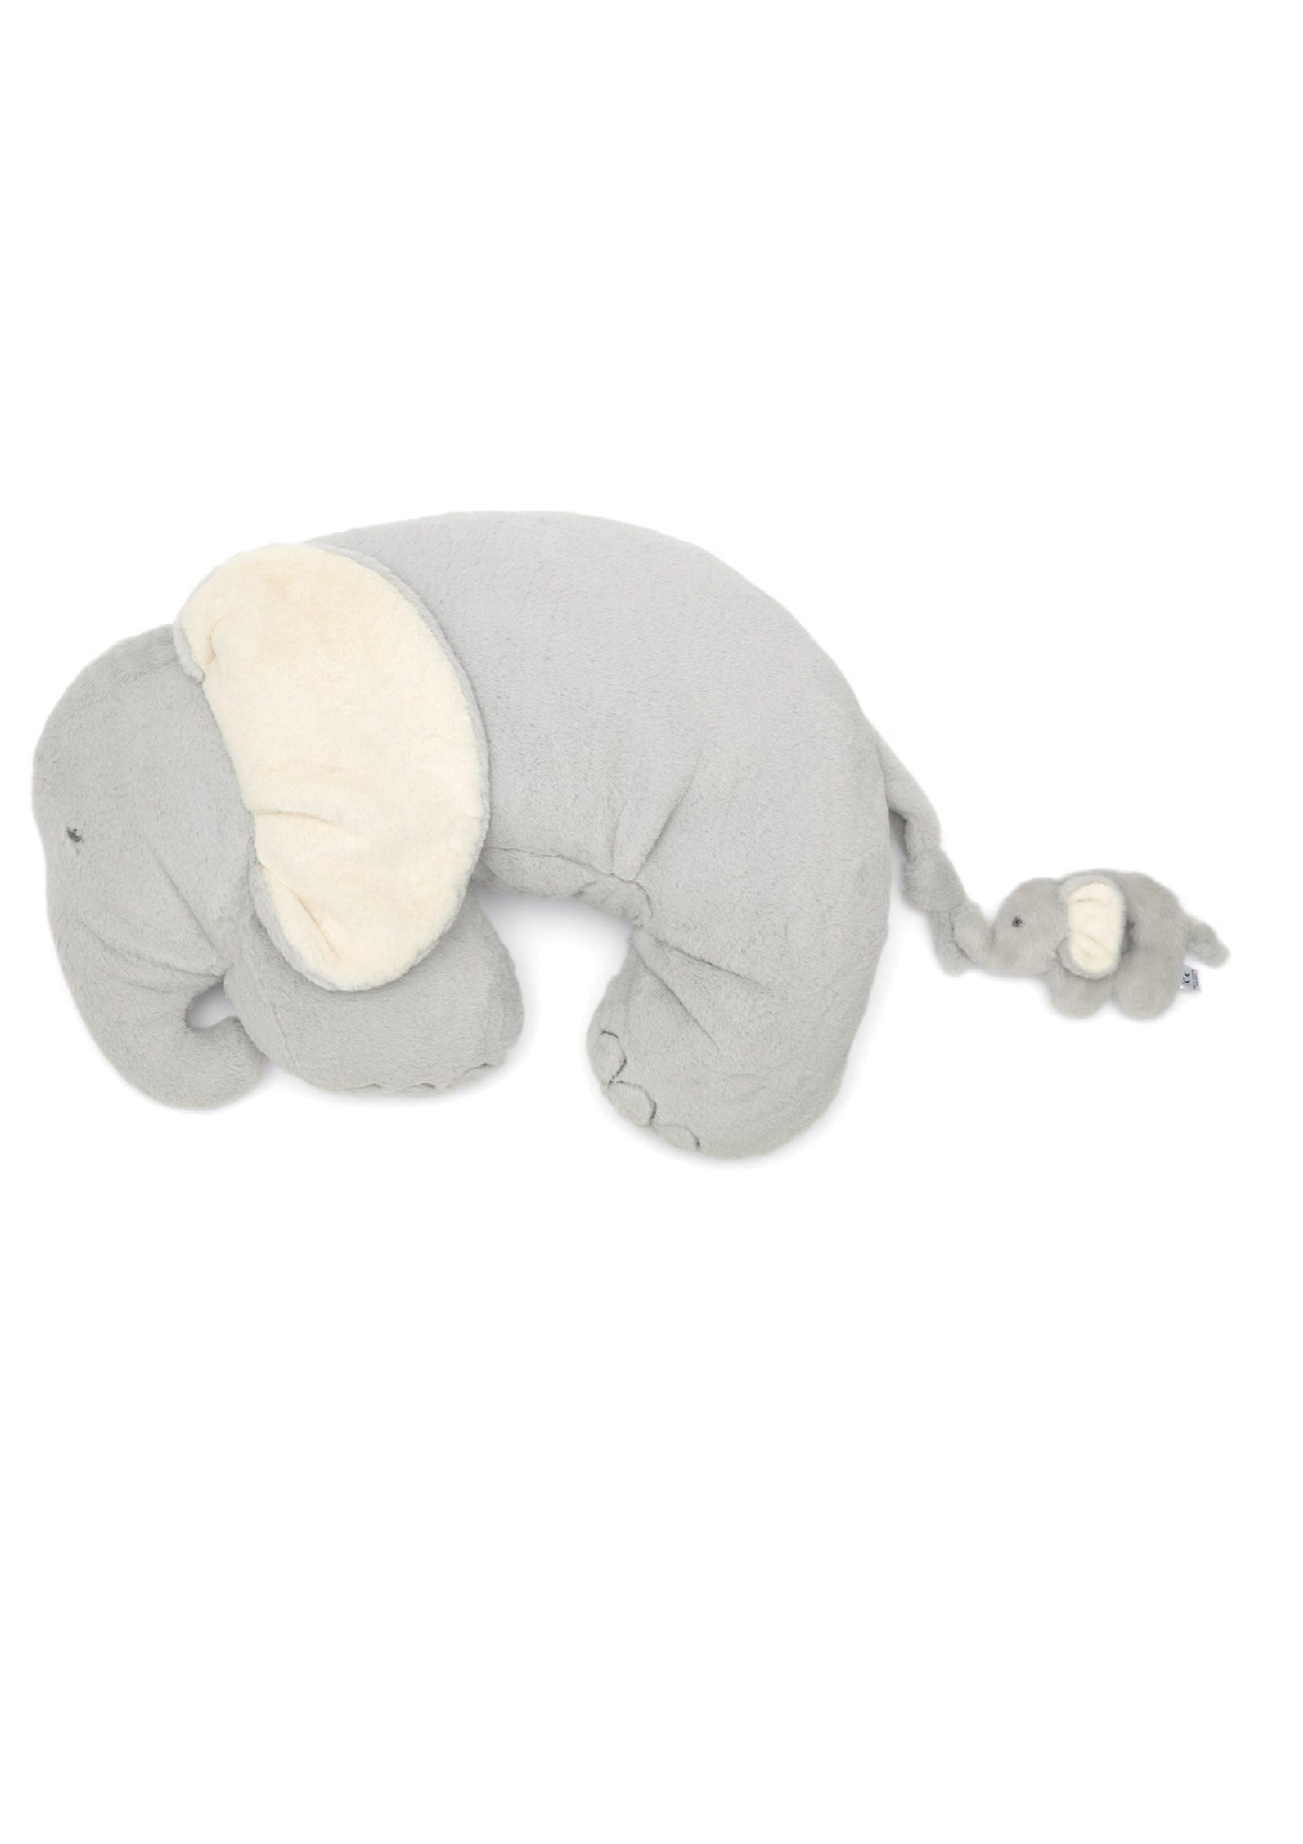 Mamas and Papas Tummy Time SnuggleRug Elephant